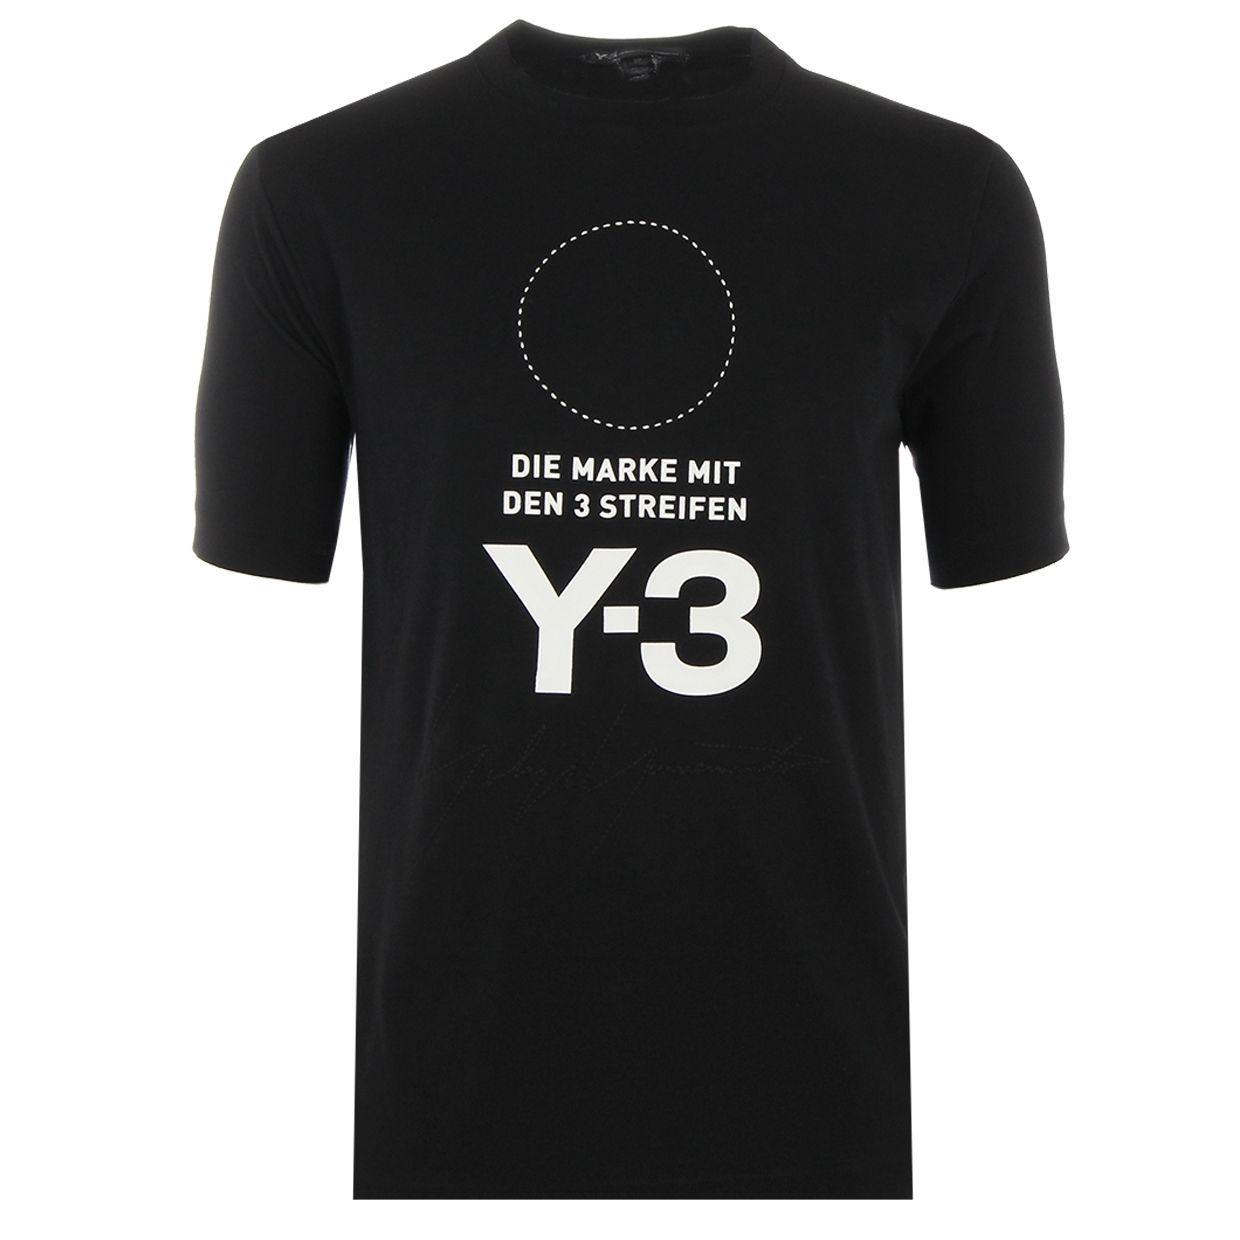 Y-3 Logo - Y 3 Die Marke Mit Black T Shirt